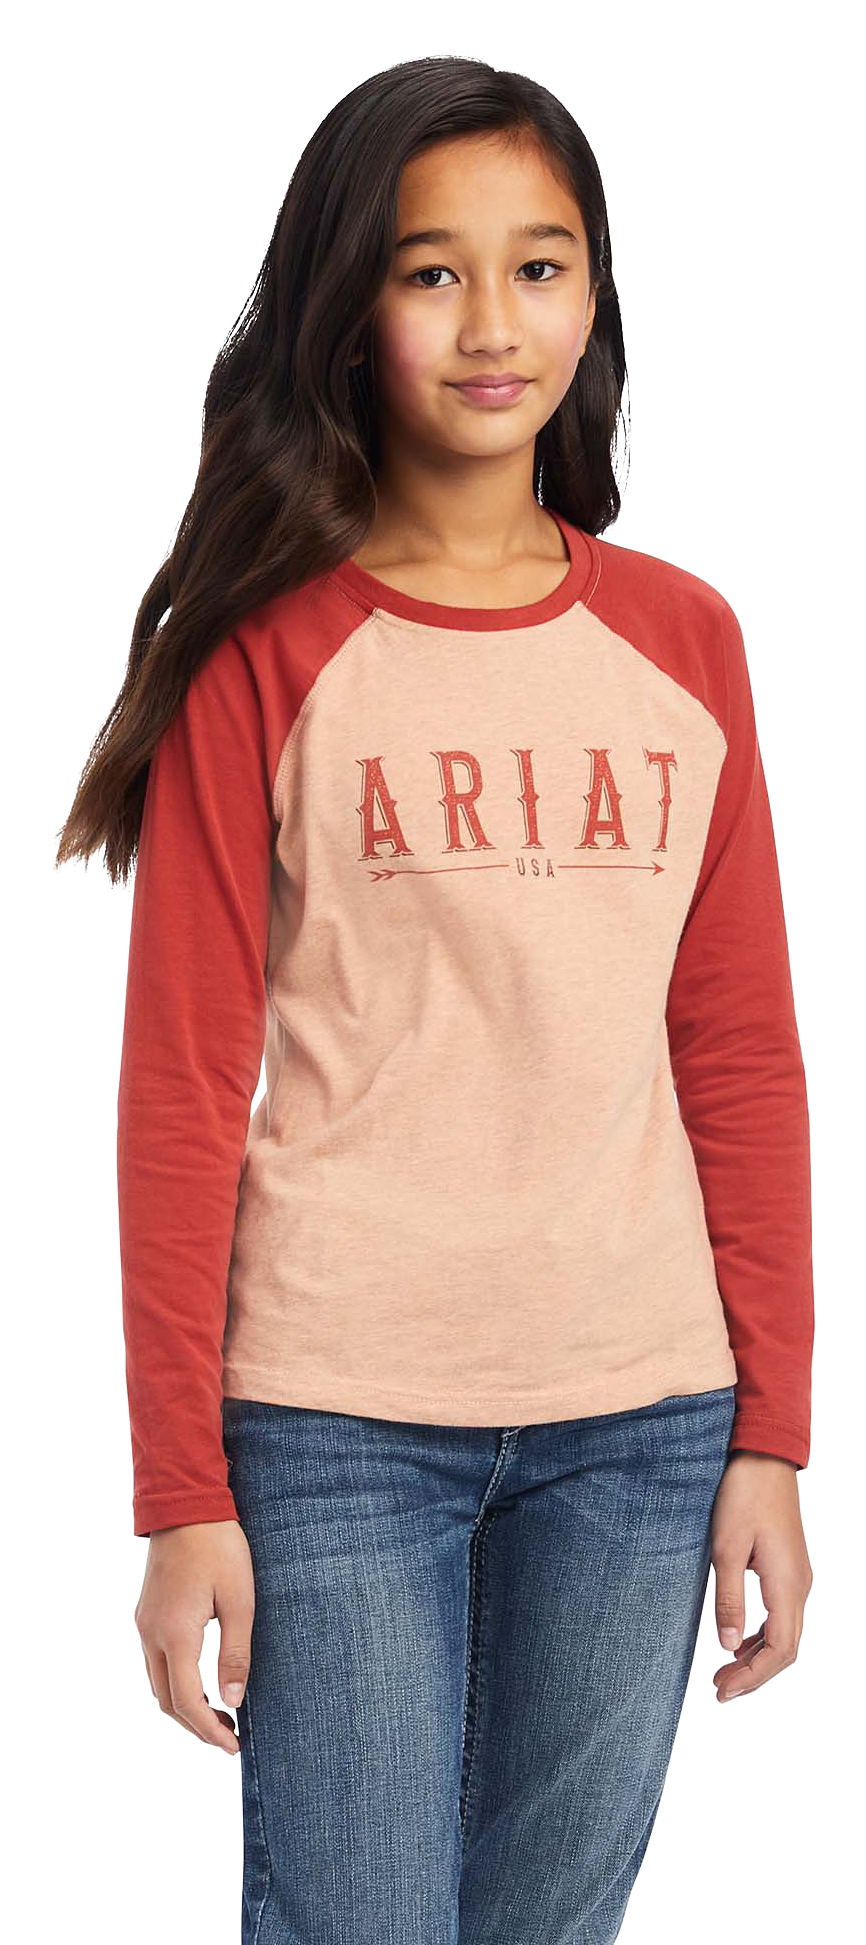 Ariat R.E.A.L. Arrow Long-Sleeve T-Shirt for Girls - Palm Heather - XS